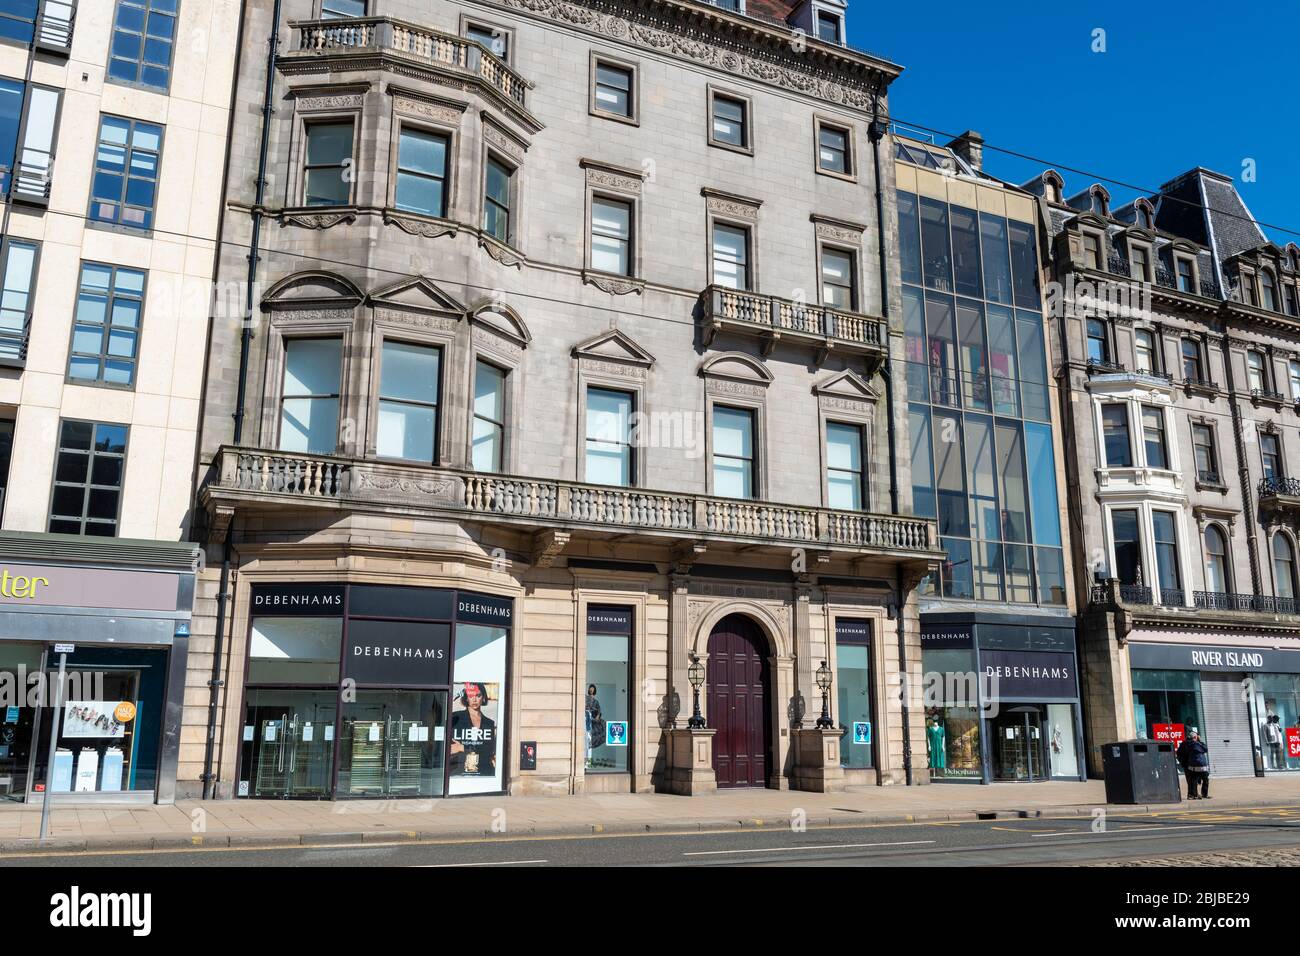 Shops and businesses including Debenhams Department Store on Princes Street closed for business during coronavirus lockdown - Edinburgh, Scotland, UK Stock Photo